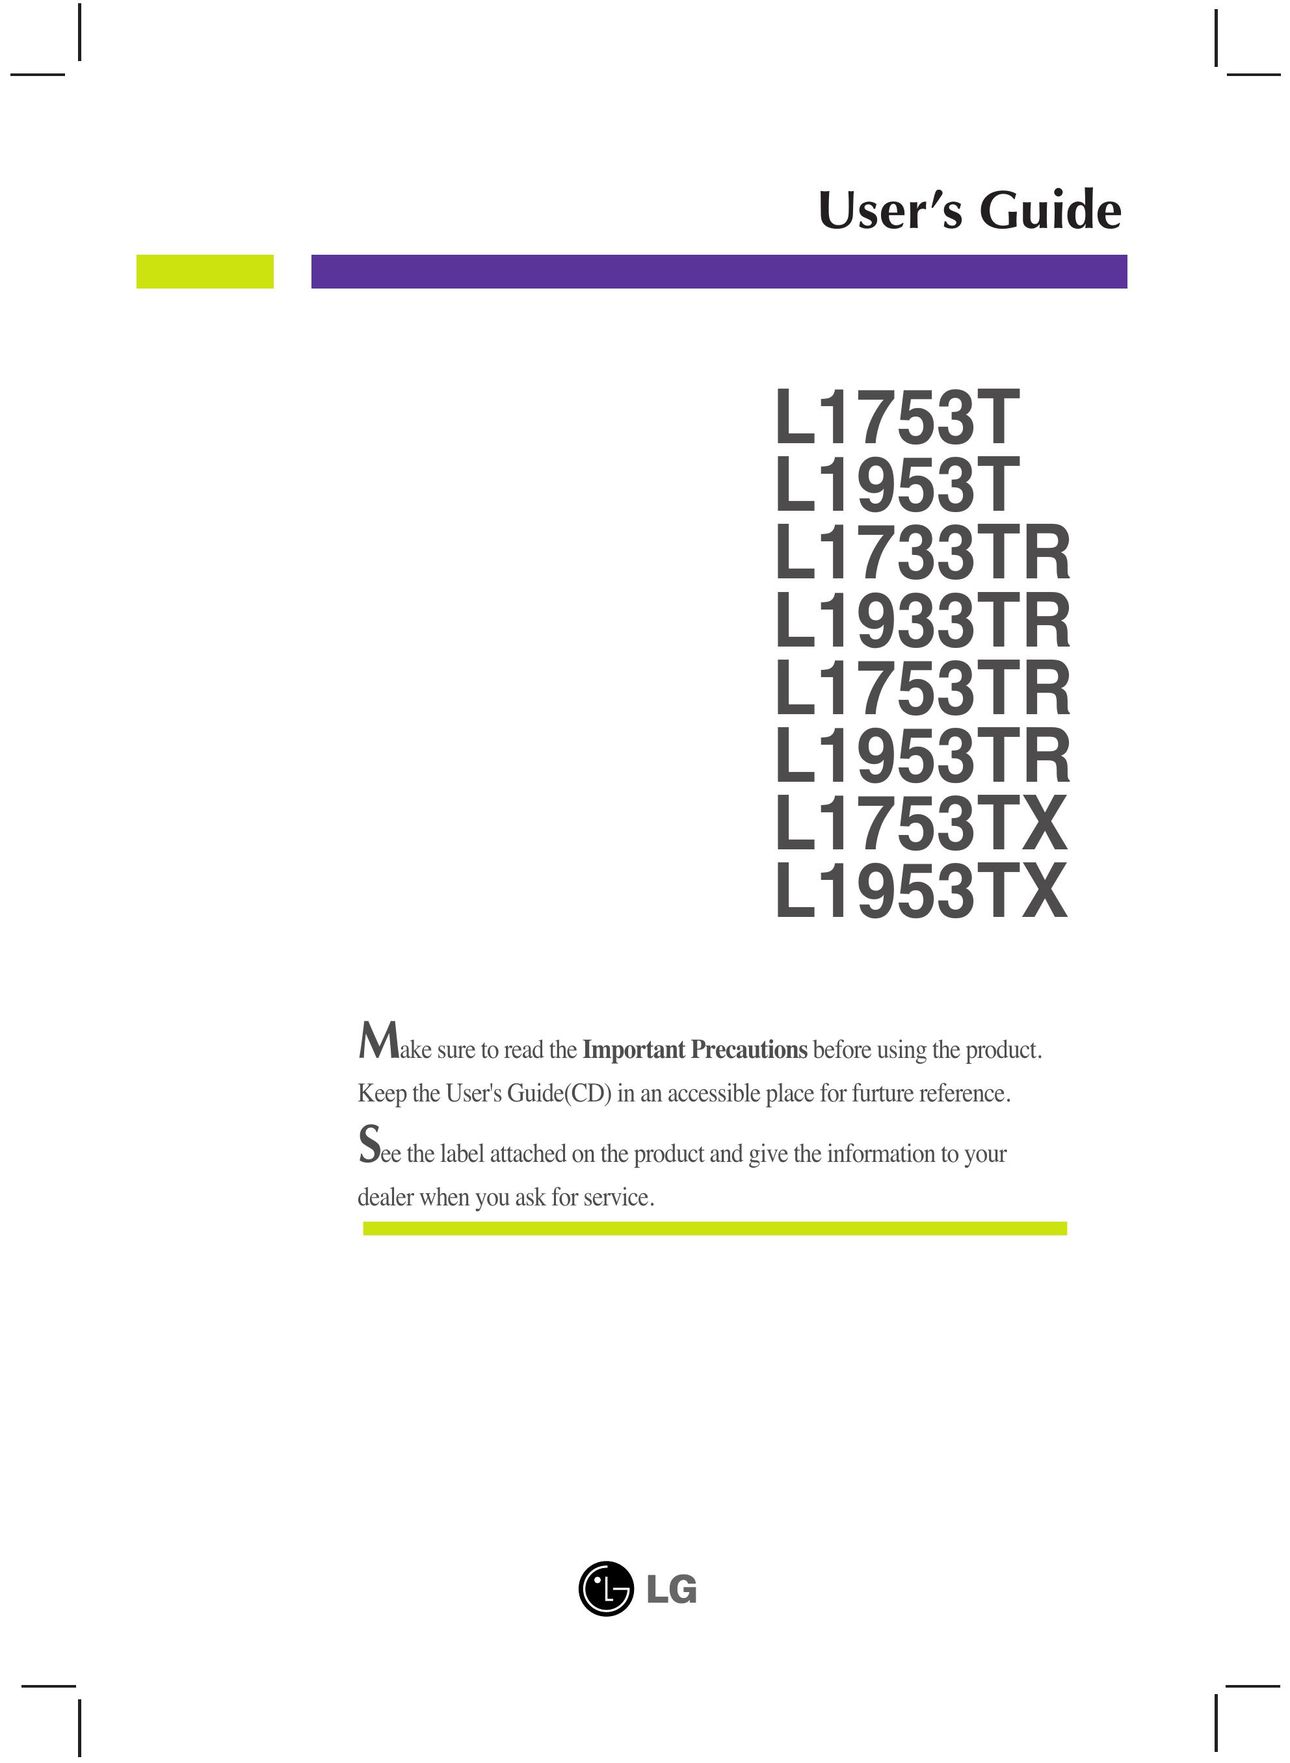 LG Electronics L1753TX CD Player User Manual